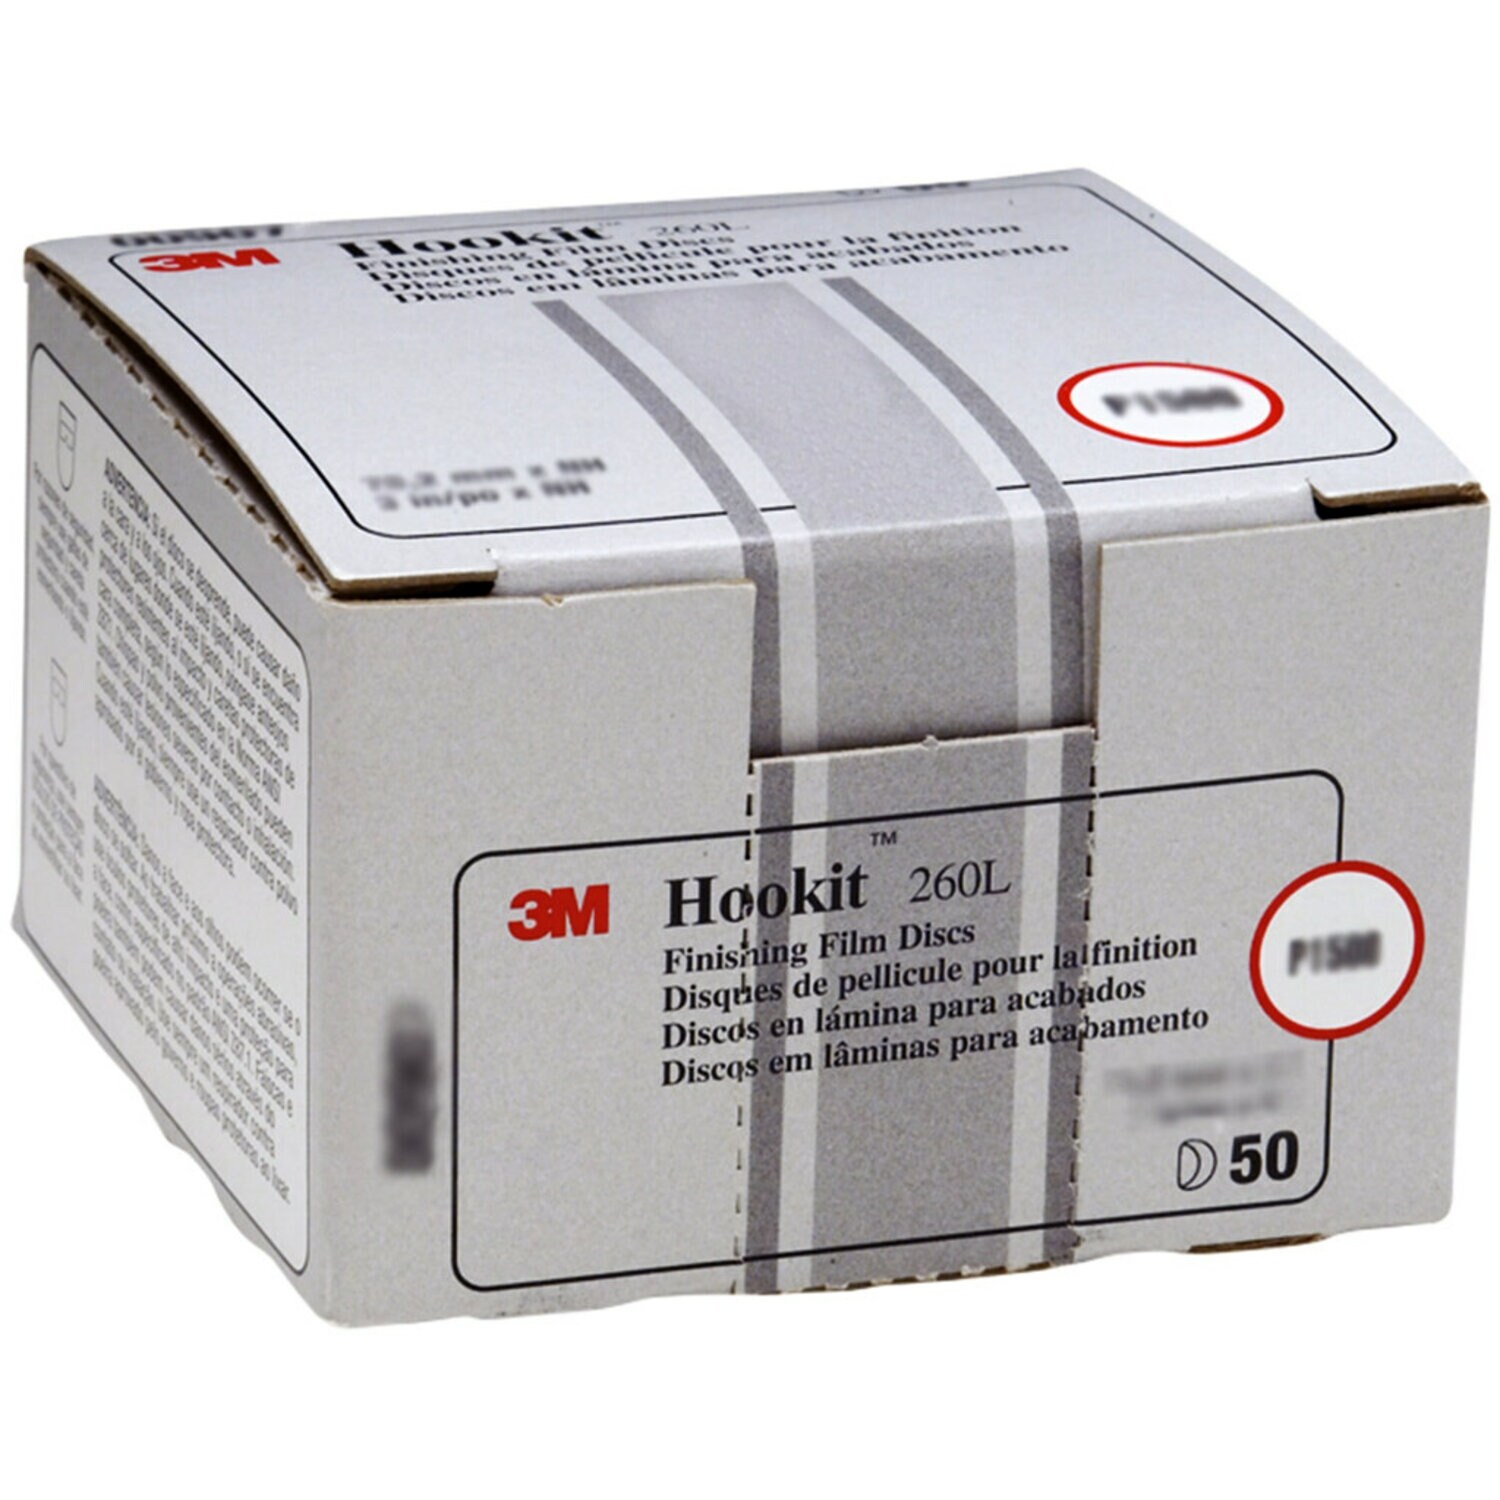 7000021278 - 3M Hookit Finishing Film Abrasive Disc 260L, 00909, 3 in, P1000, 50
discs per carton, 4 cartons per case